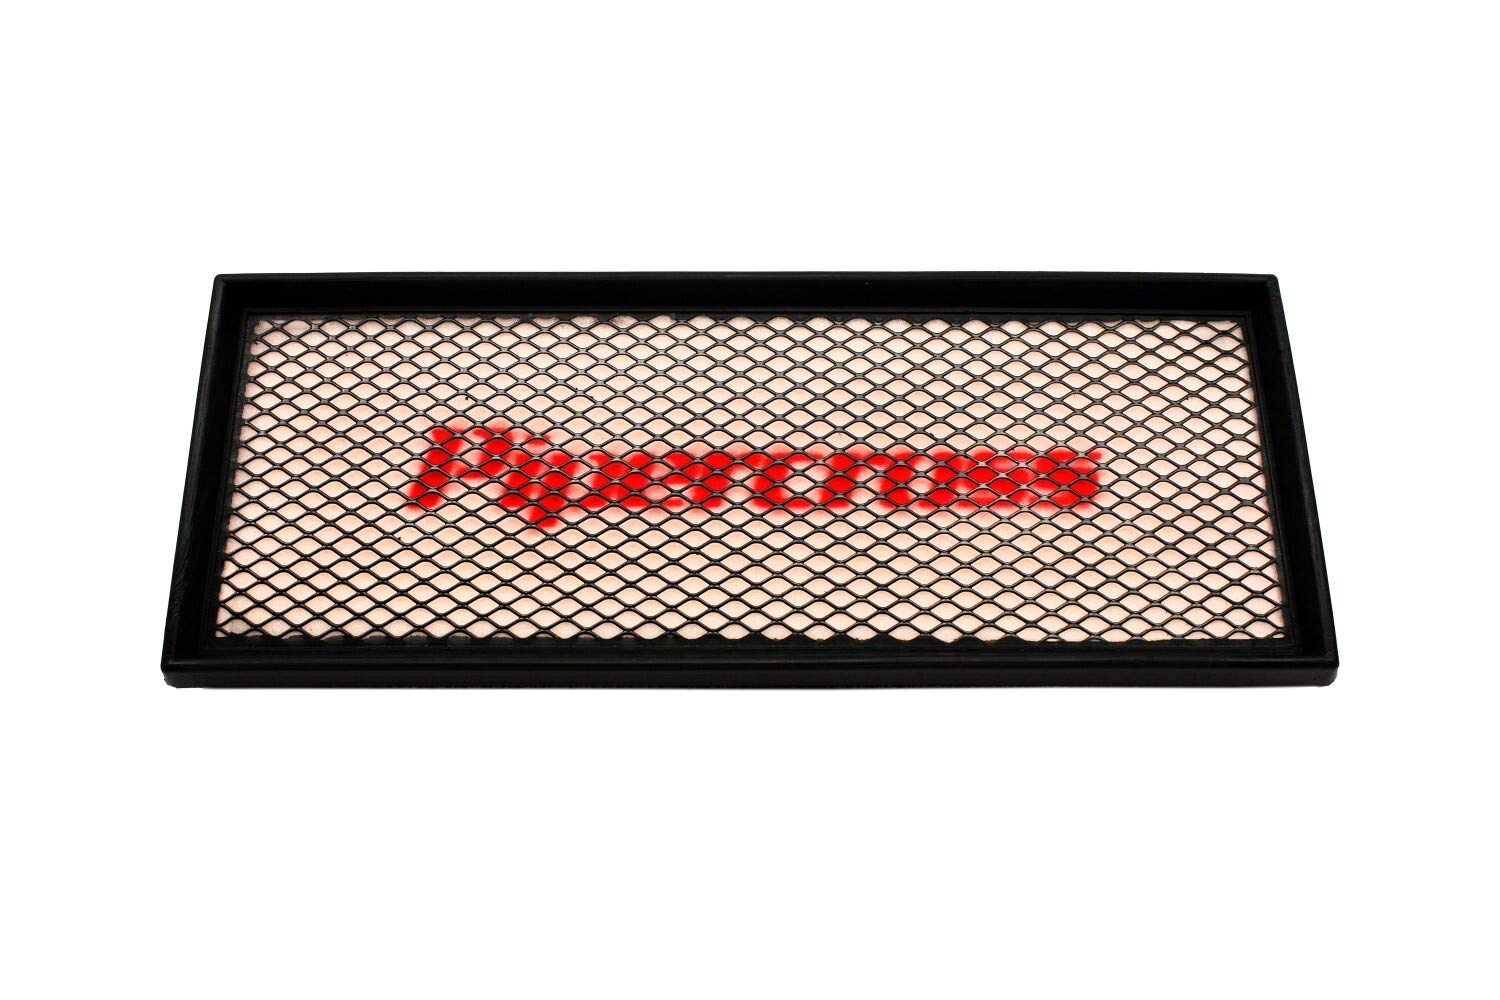 Pipercross Sportluftfilter kompatibel mit Mercedes CL-Klasse C215 CL500 306 PS 09/99-03/06 von Pipercross